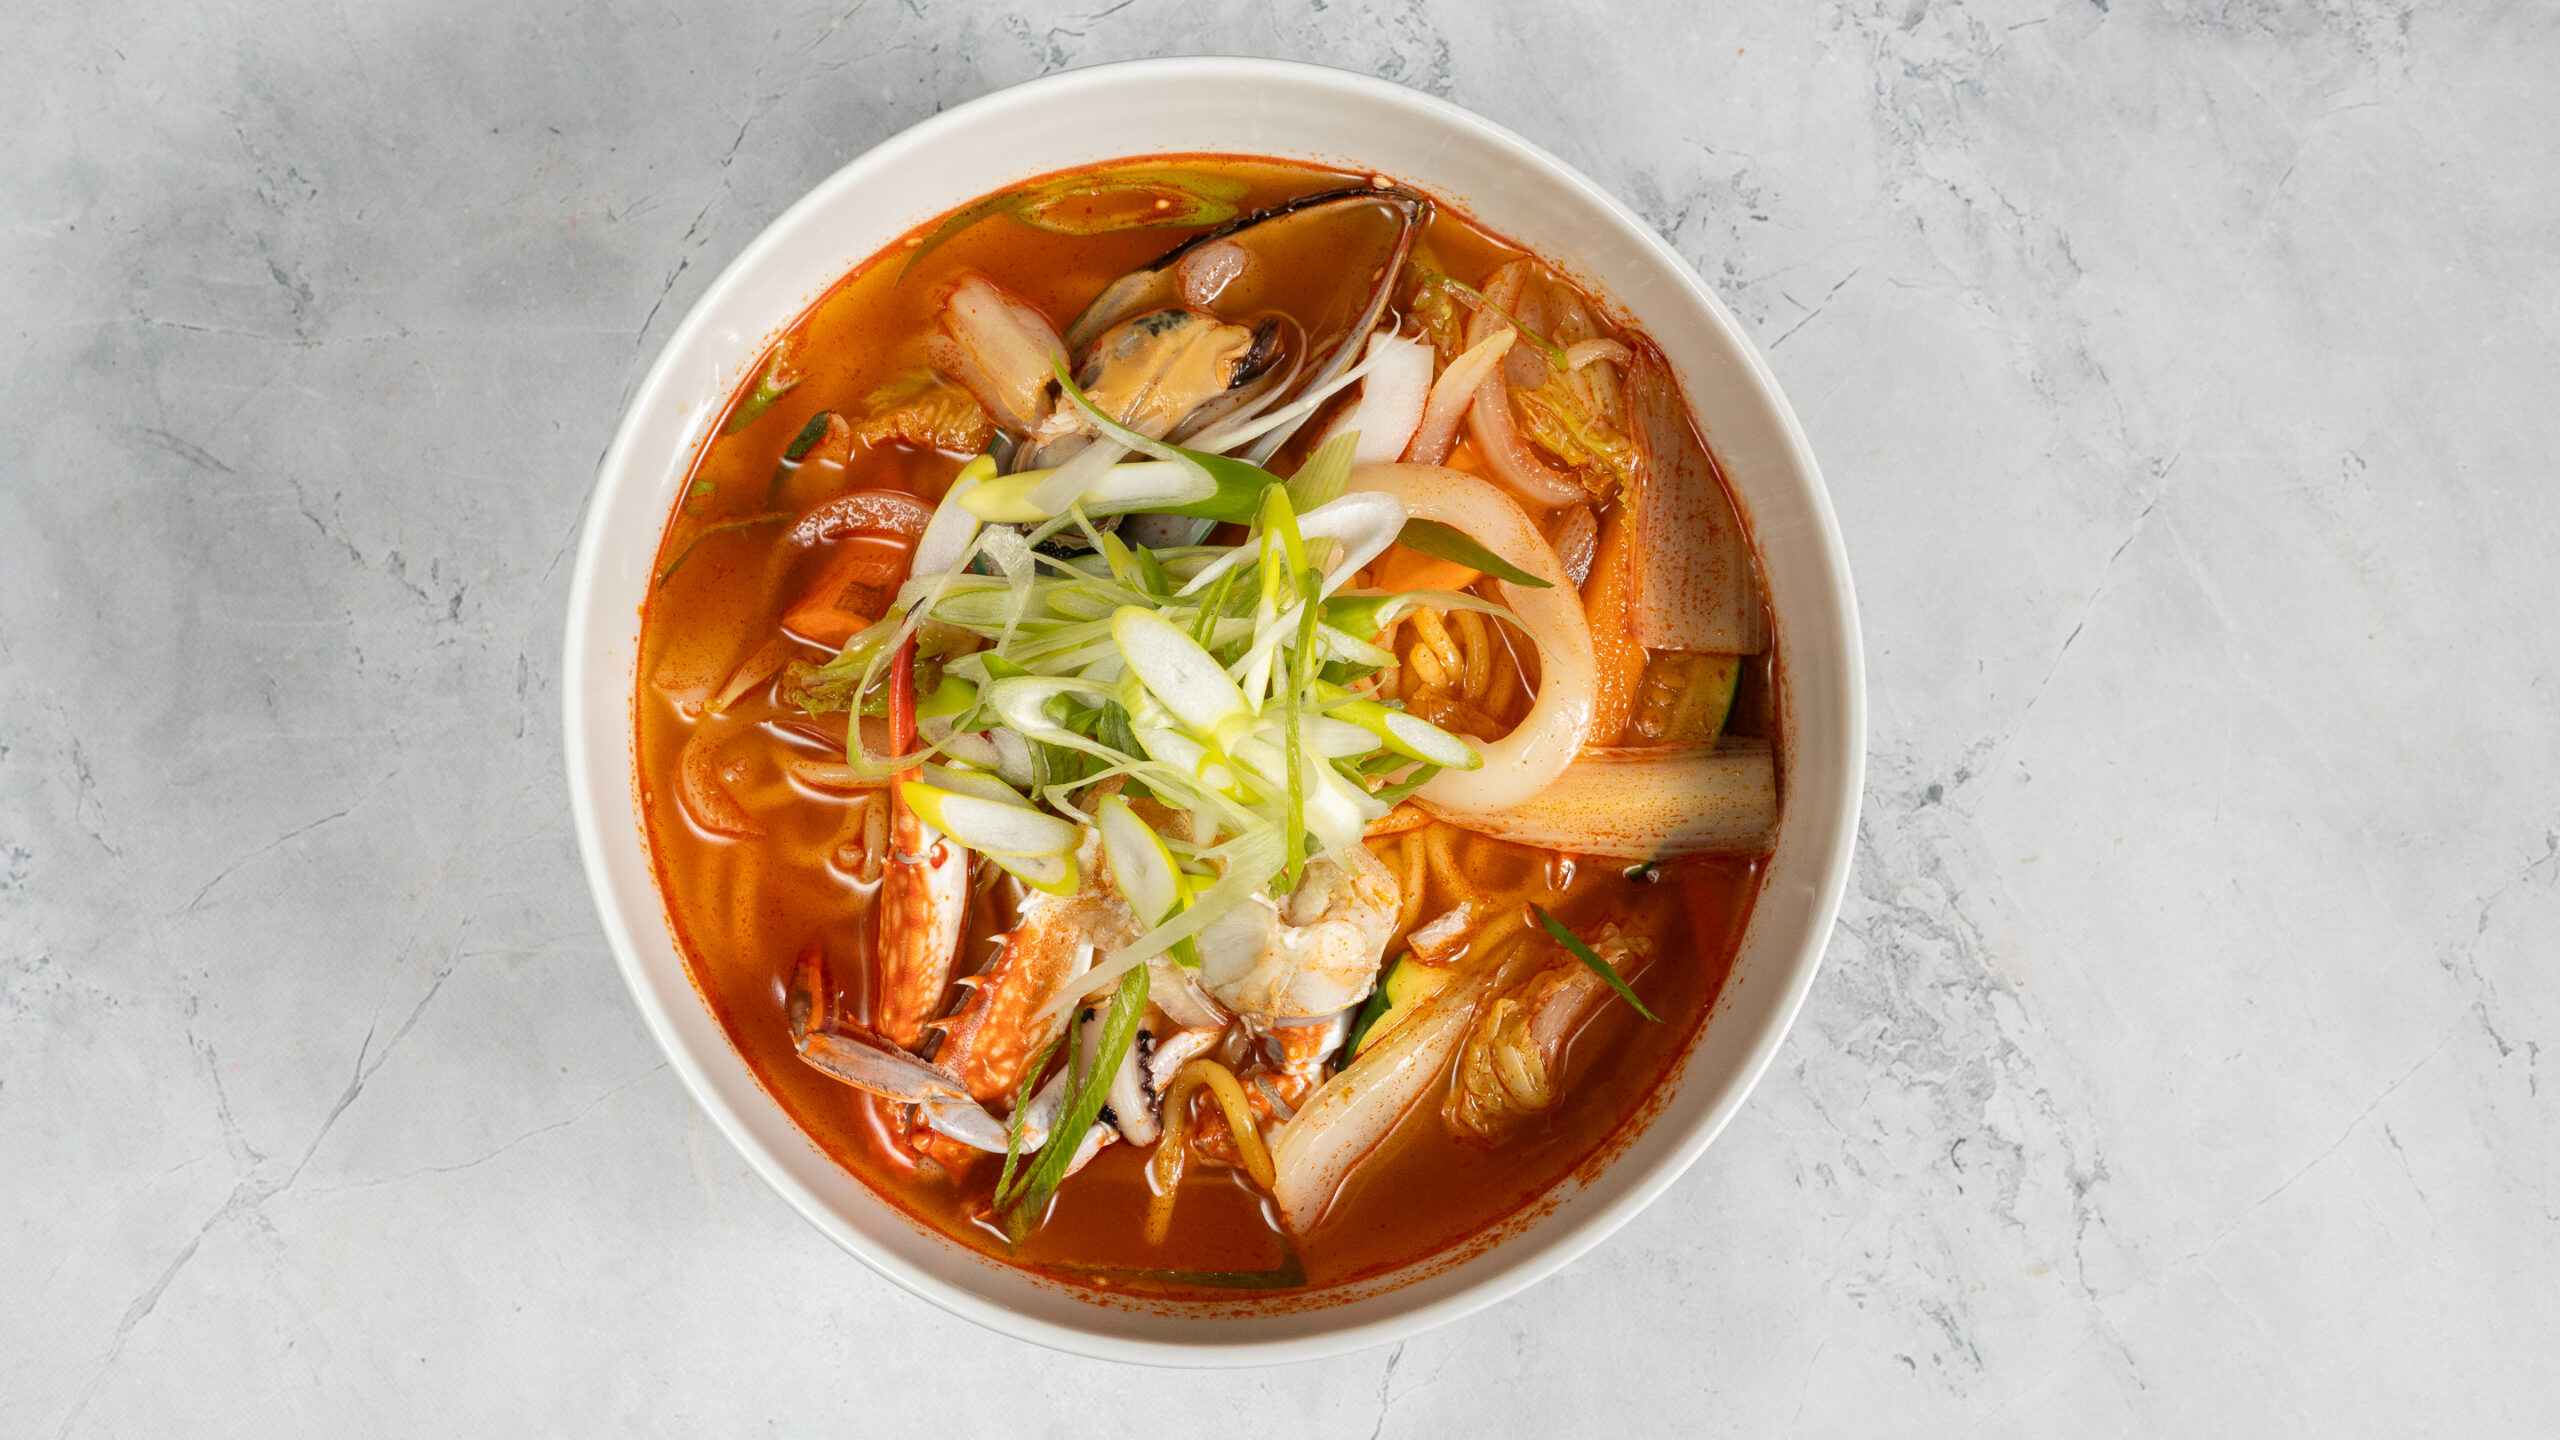 Haemuljjamppong (Spicy Seafood Noodle Soup)